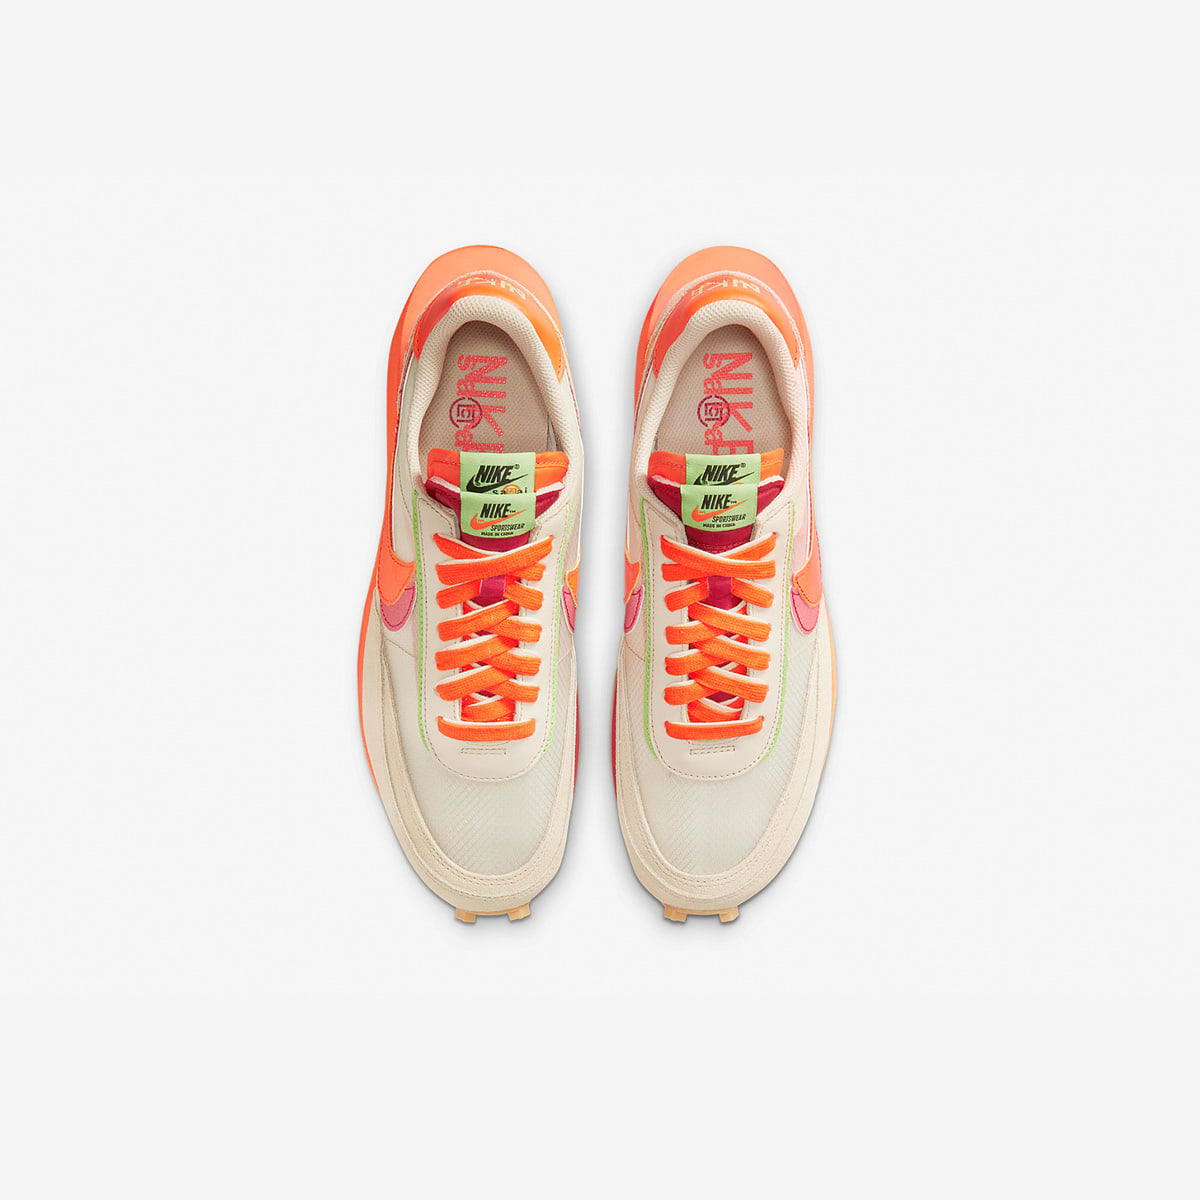 Nike x Sacai x CLOT LDWaffle (Orange Blaze & Deep Red) | END. Launches